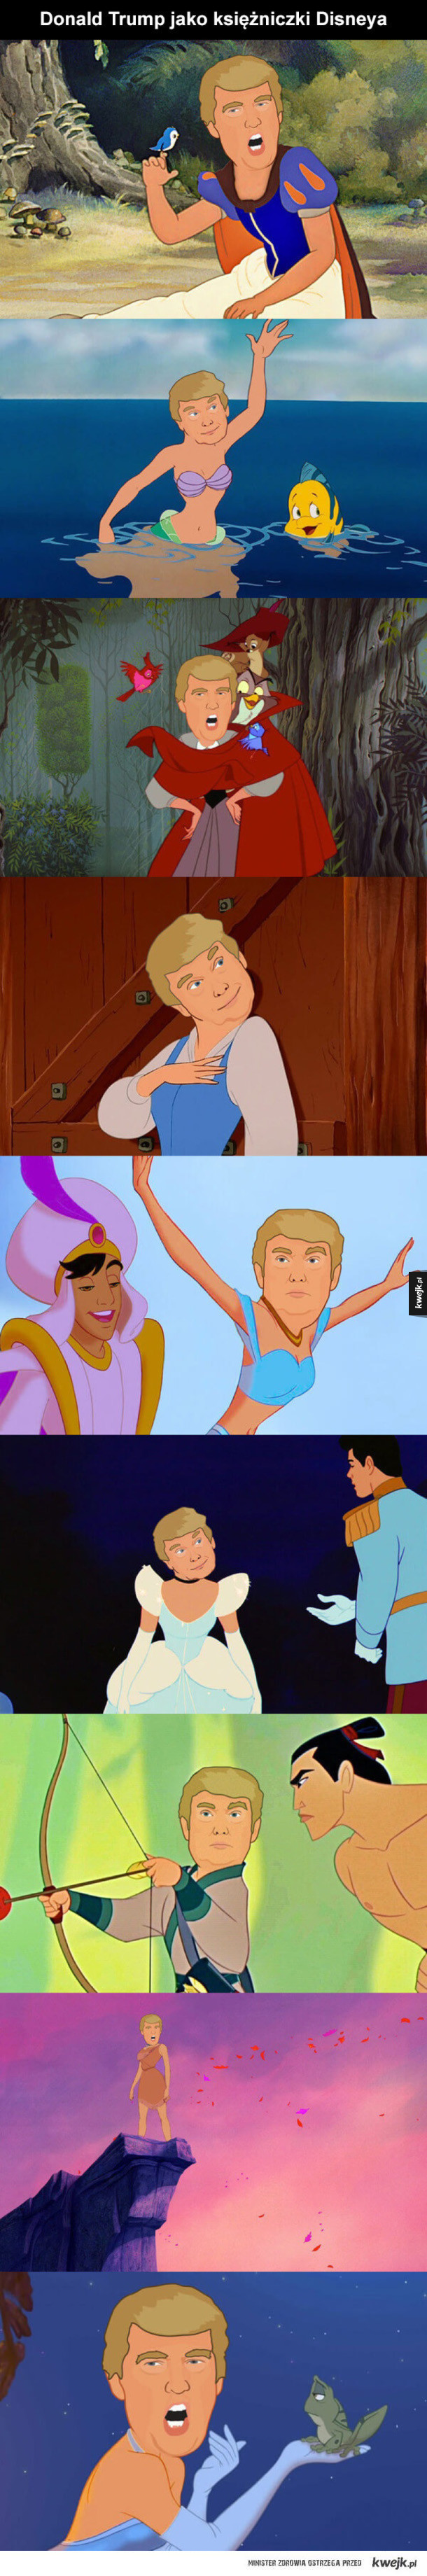 Donald Trump jako księżniczki Disneya